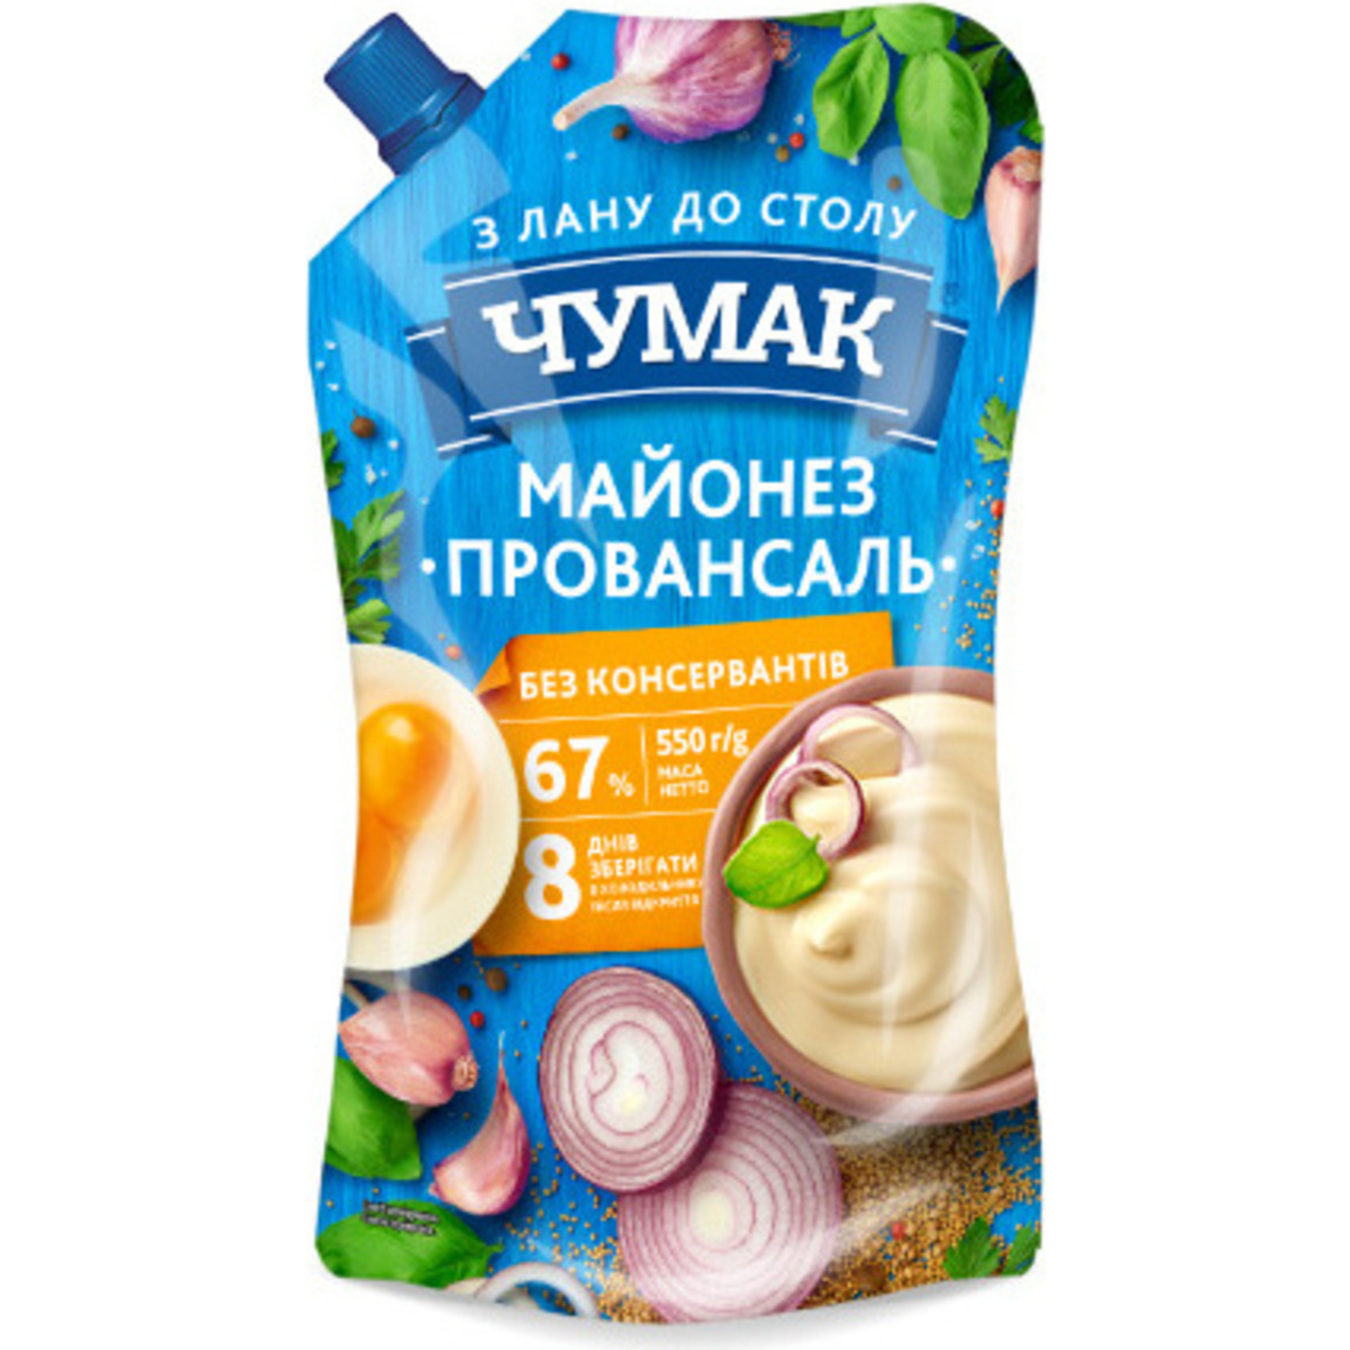 Chumak Provence Mayonnaise 67% 550g